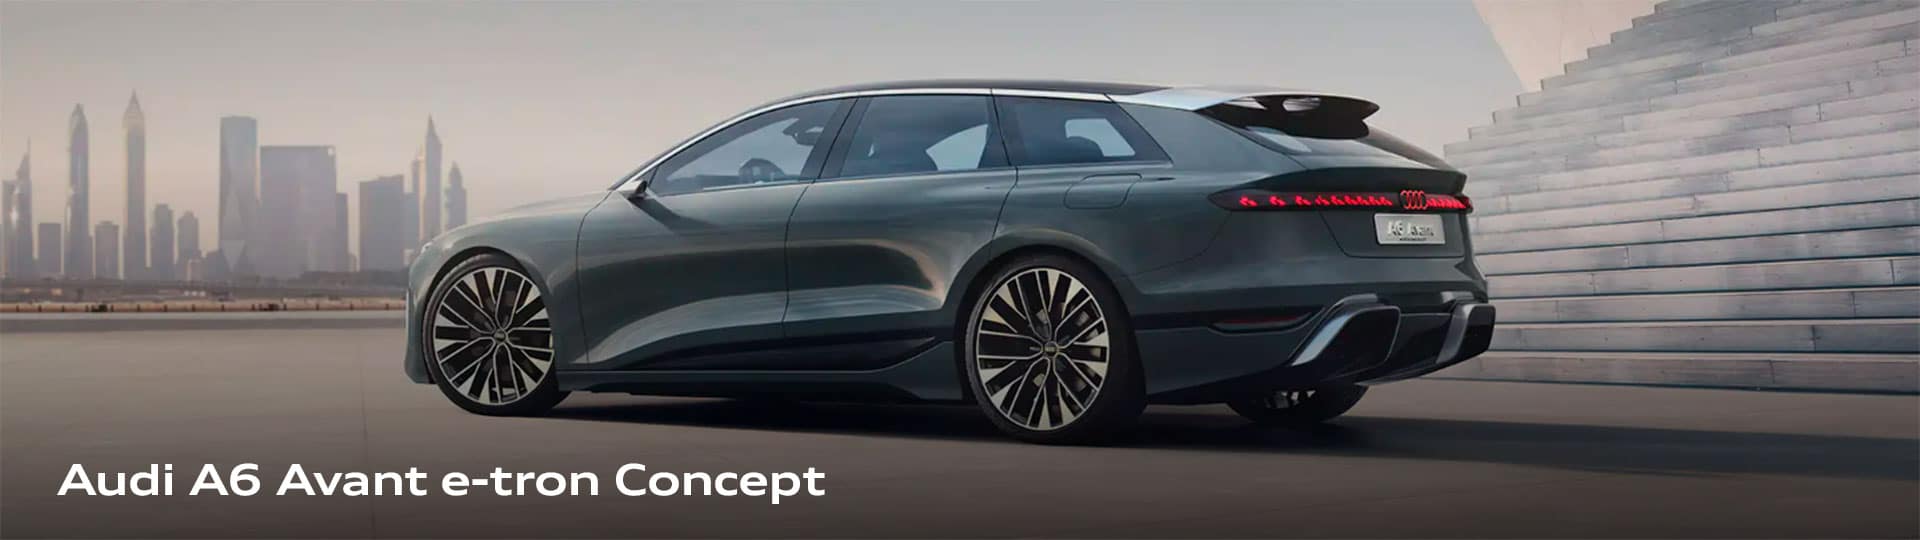 Audi-A6-Avant-e-tron-Concept-Cabecera